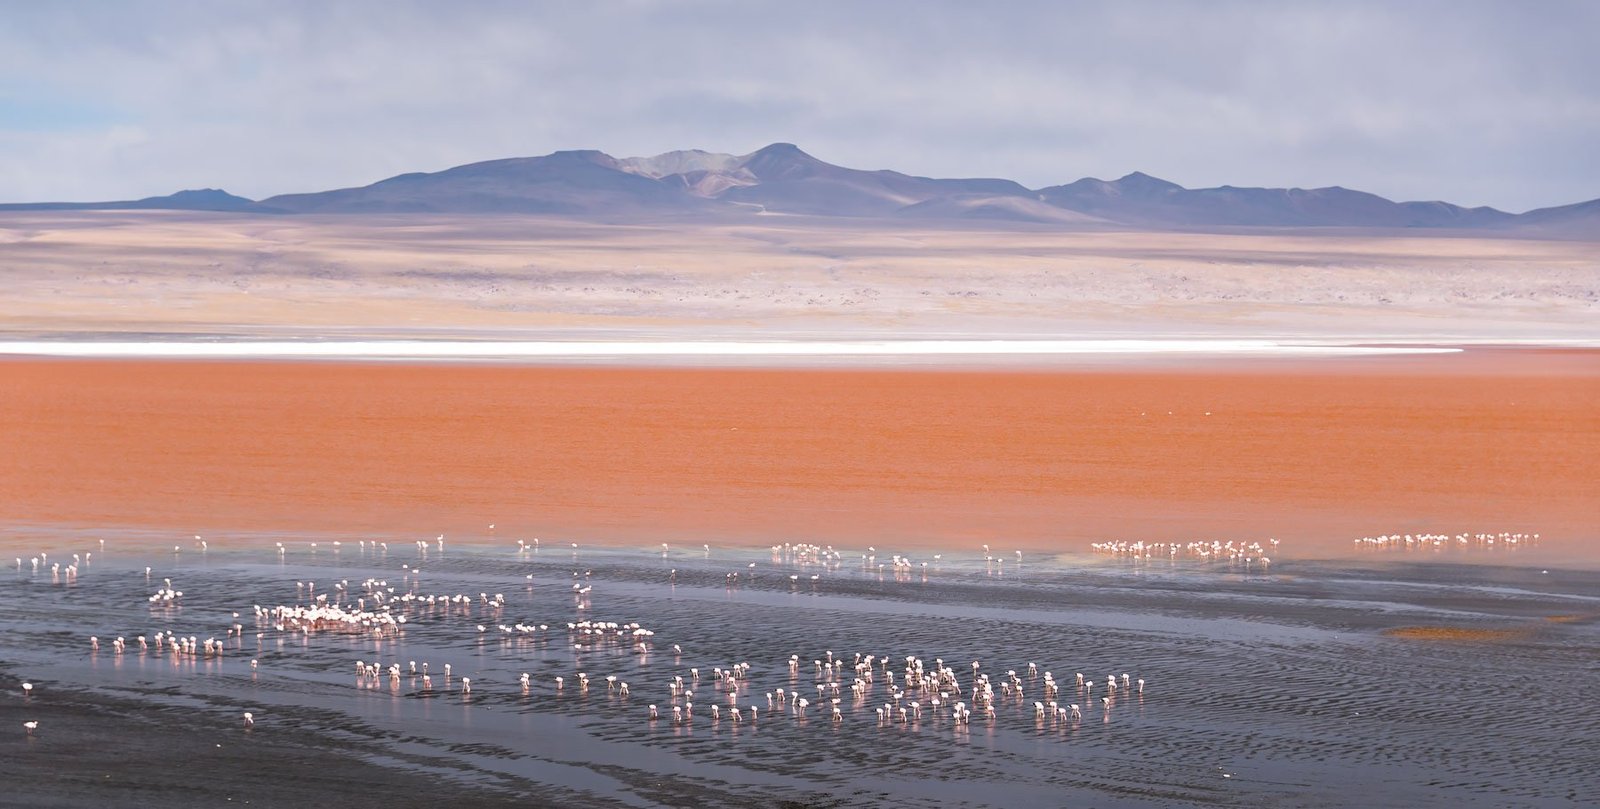 Laguna colorada (red lagoon) - Salar de Uyuni: 5 Unforgettable Experiences on Bolivia's Salt Flats and Colored Lagoons